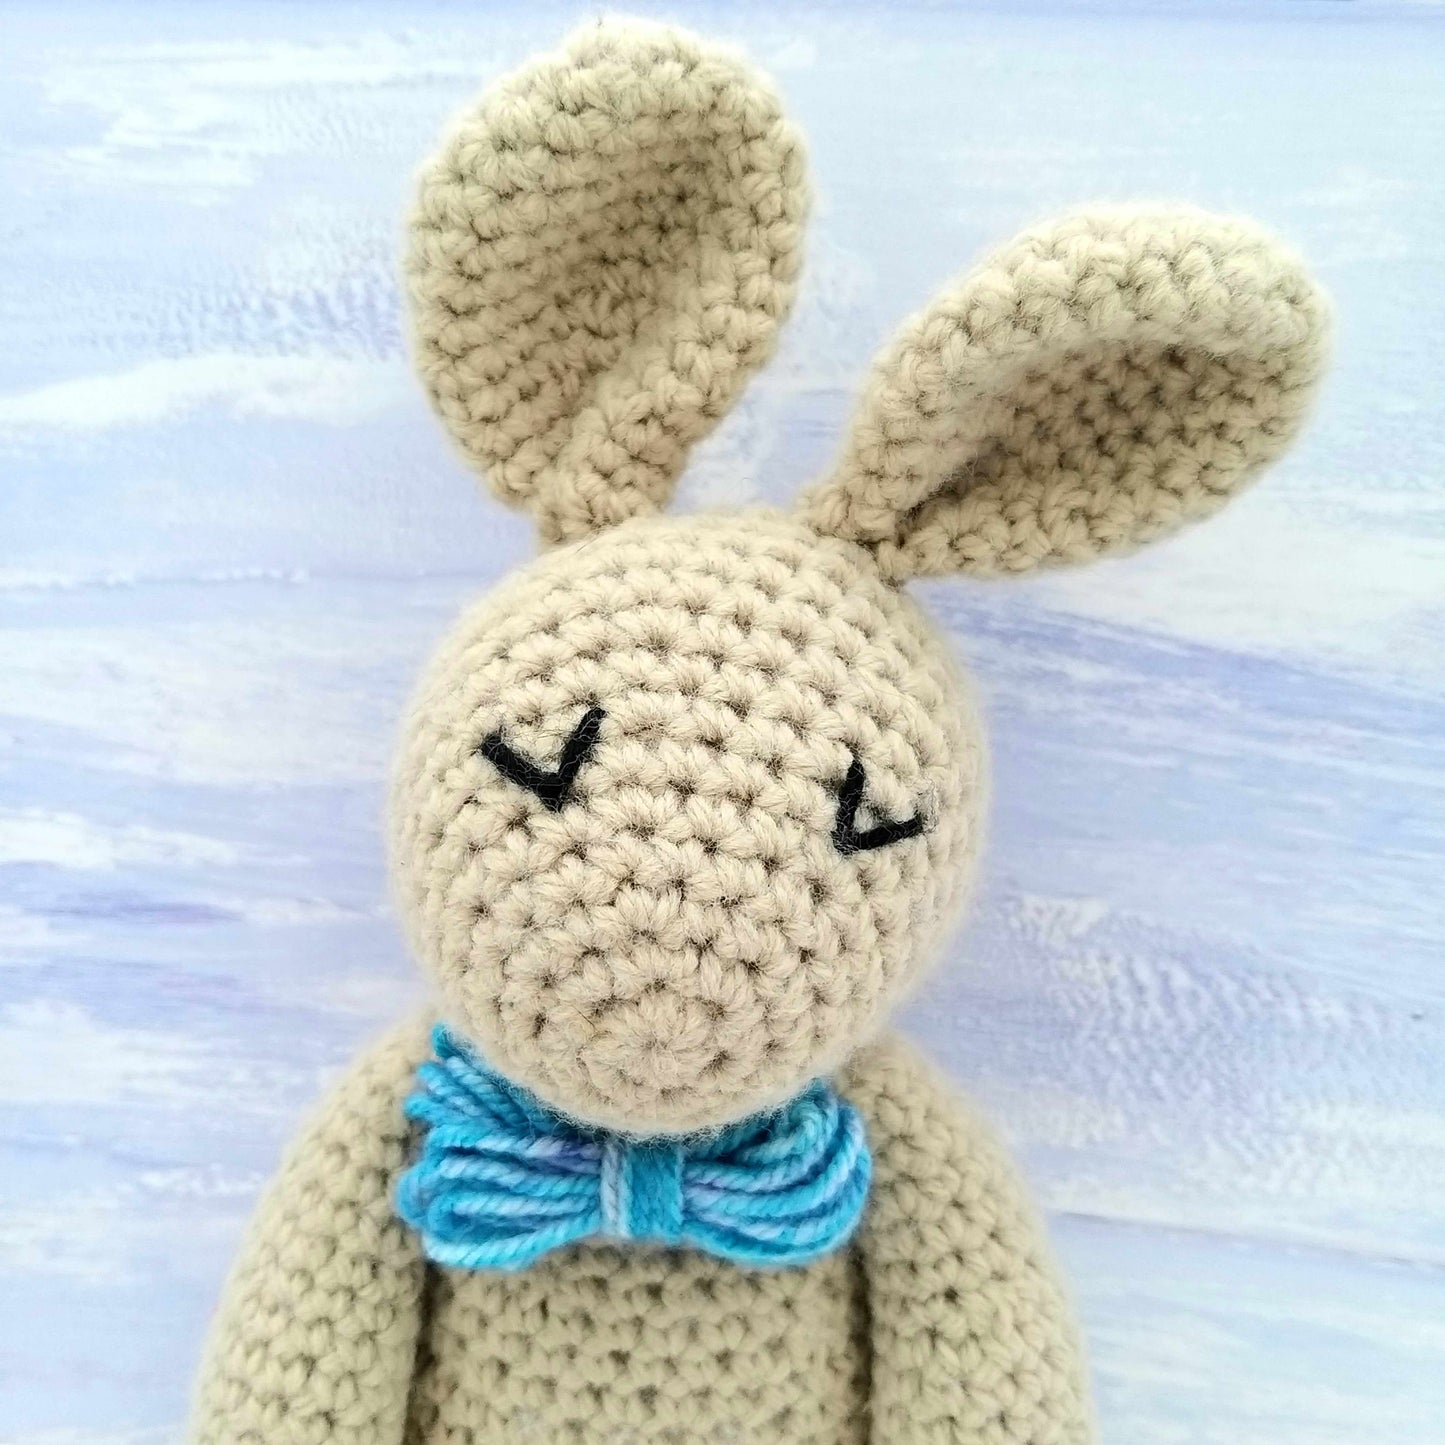 Arthur Bunny Rabbit Crochet Kit - suitable for complete beginners